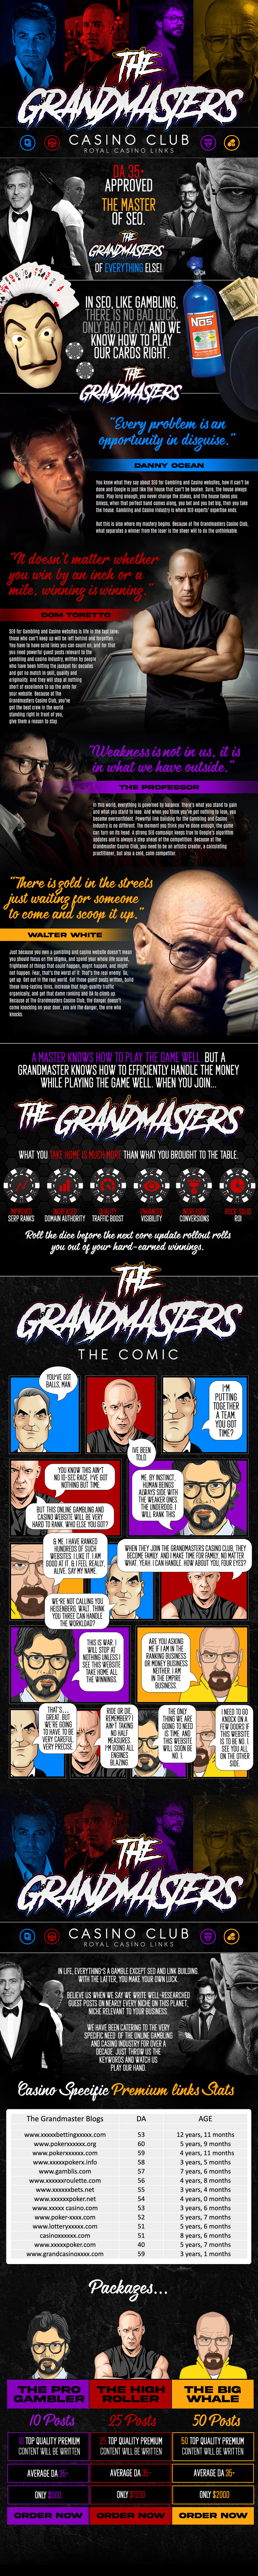 The Grandmaster Casino Club